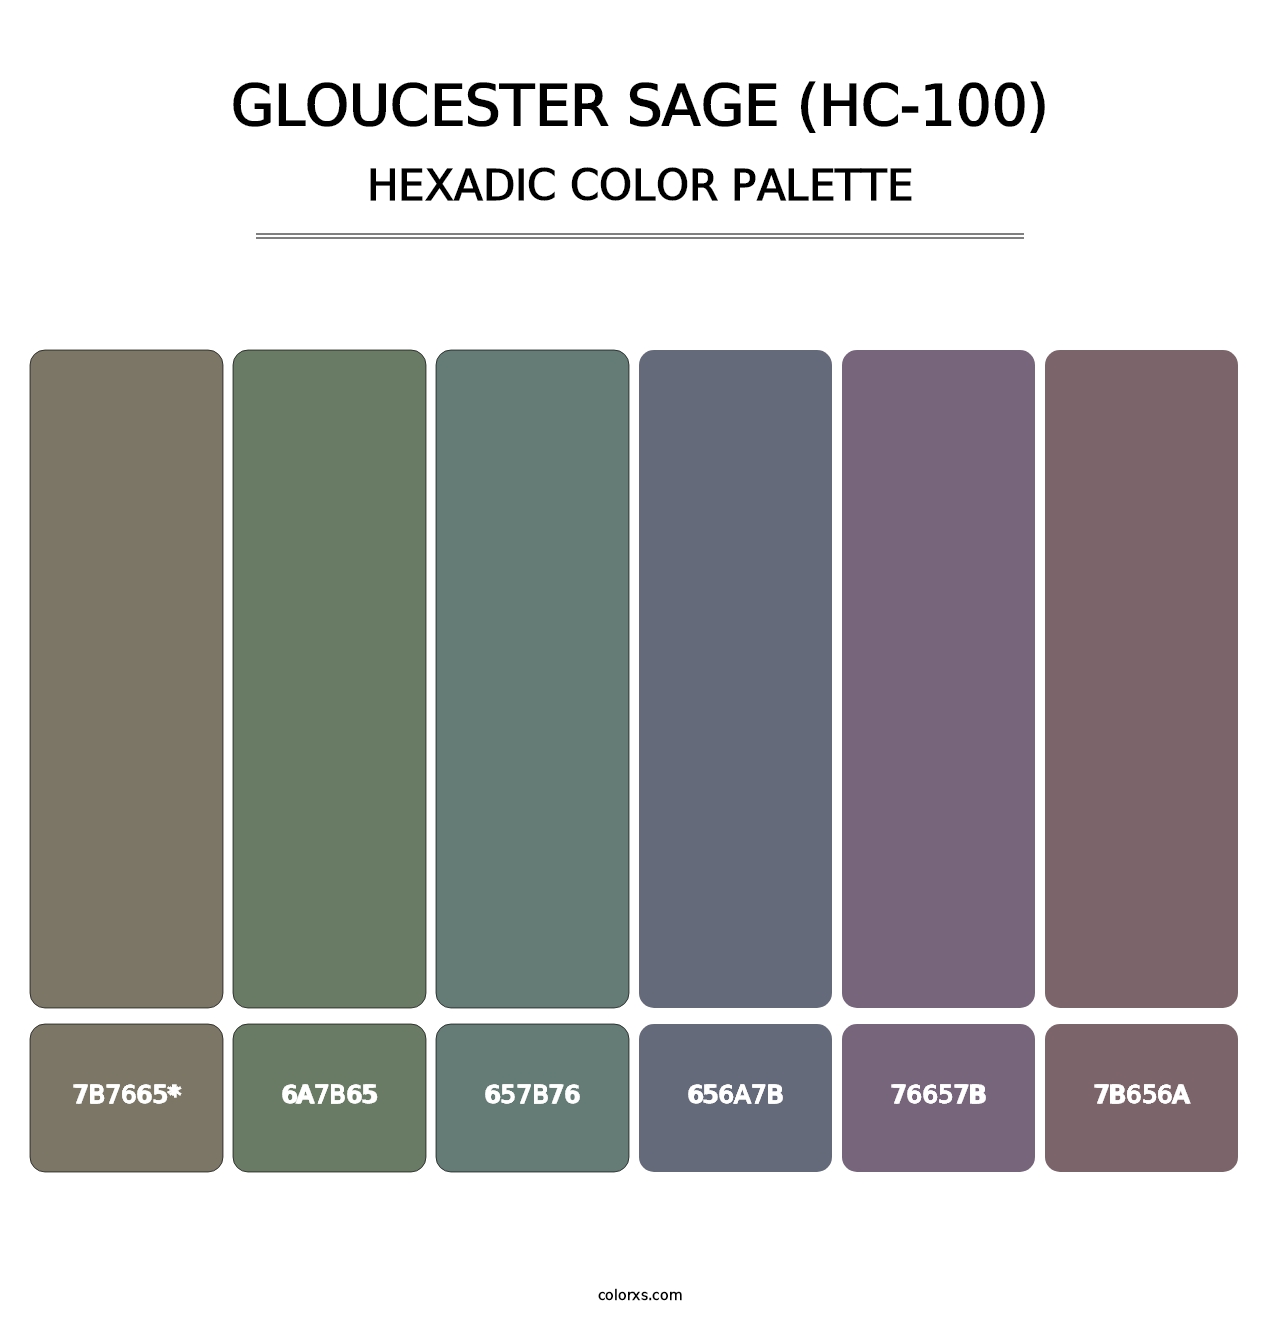 Gloucester Sage (HC-100) - Hexadic Color Palette